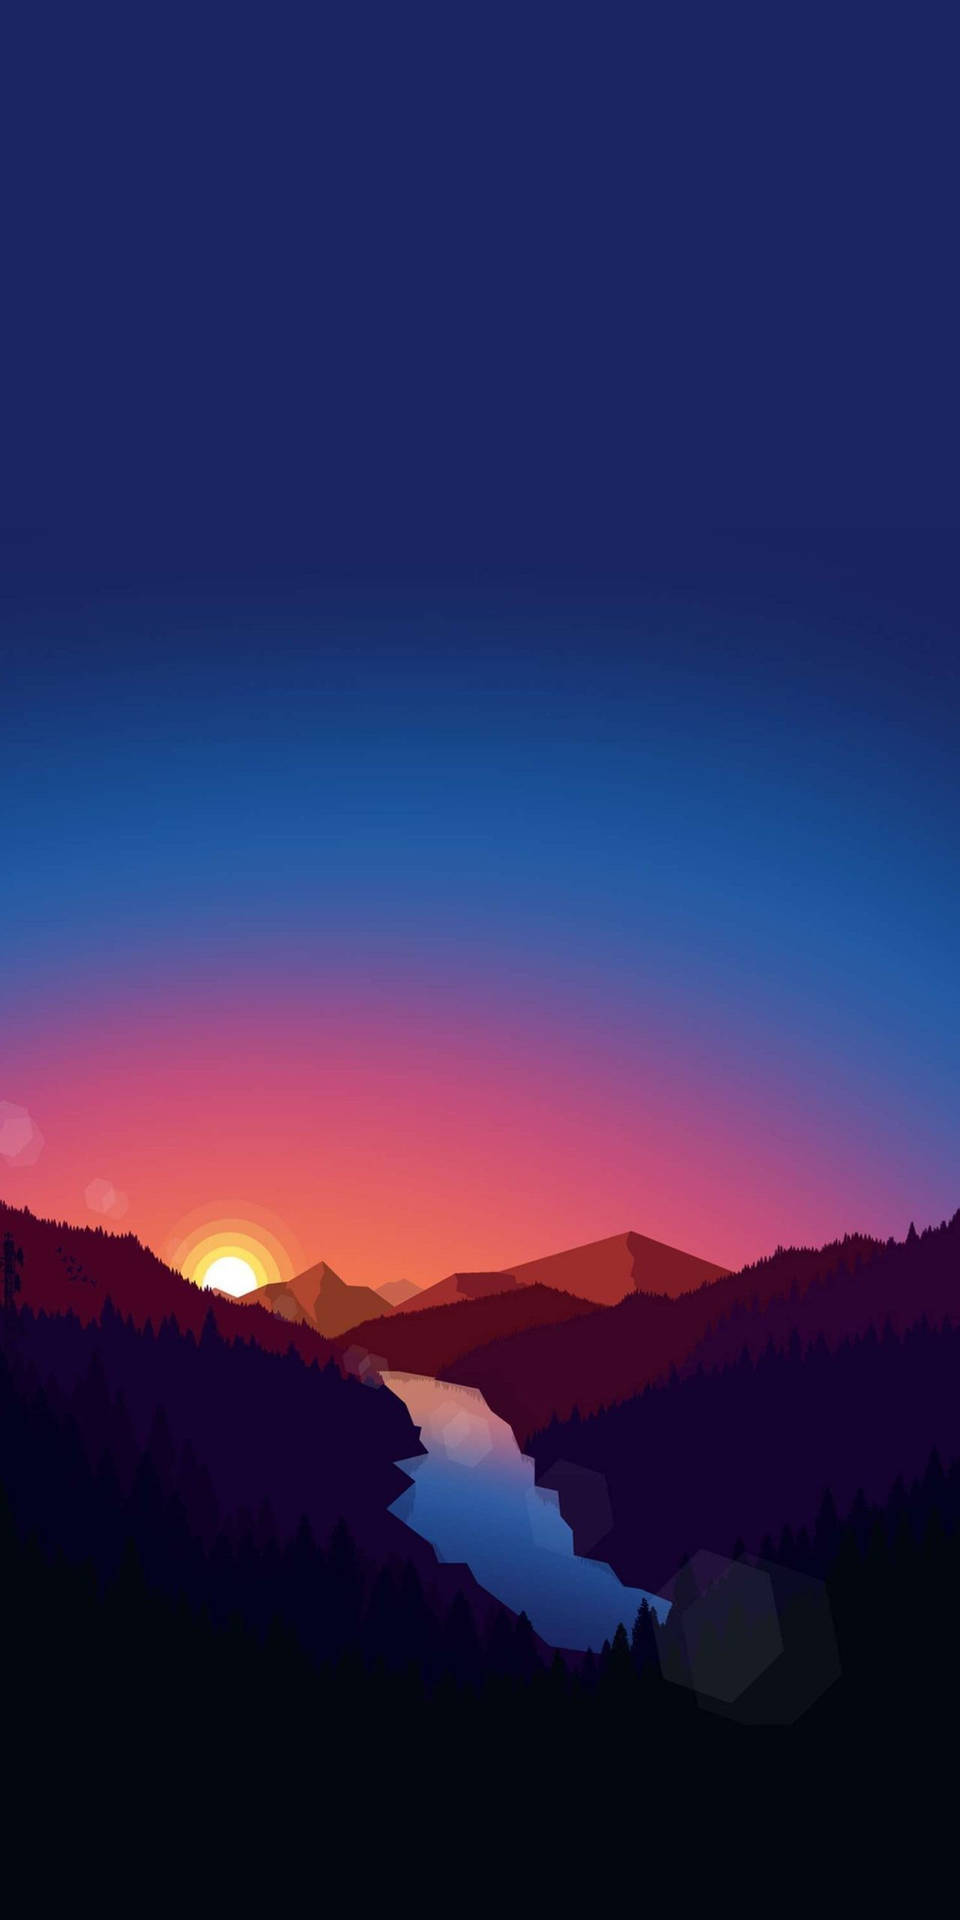 Sunset Over Mountains Minimal Dark Iphone Wallpaper